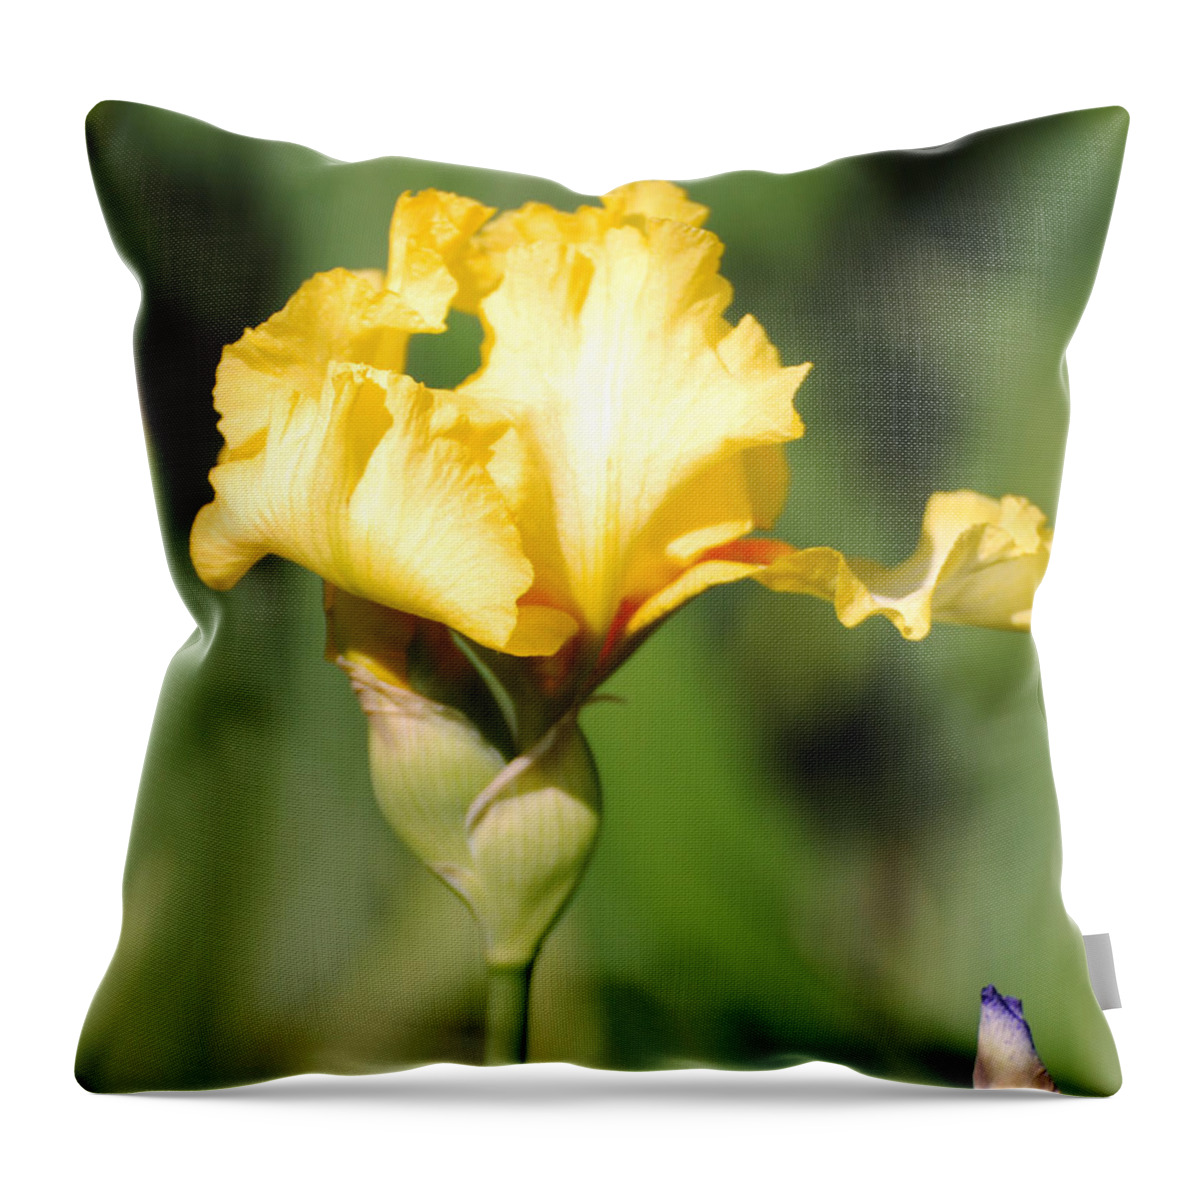 Beautiful Iris Throw Pillow featuring the photograph Yellow and White Iris by Jai Johnson